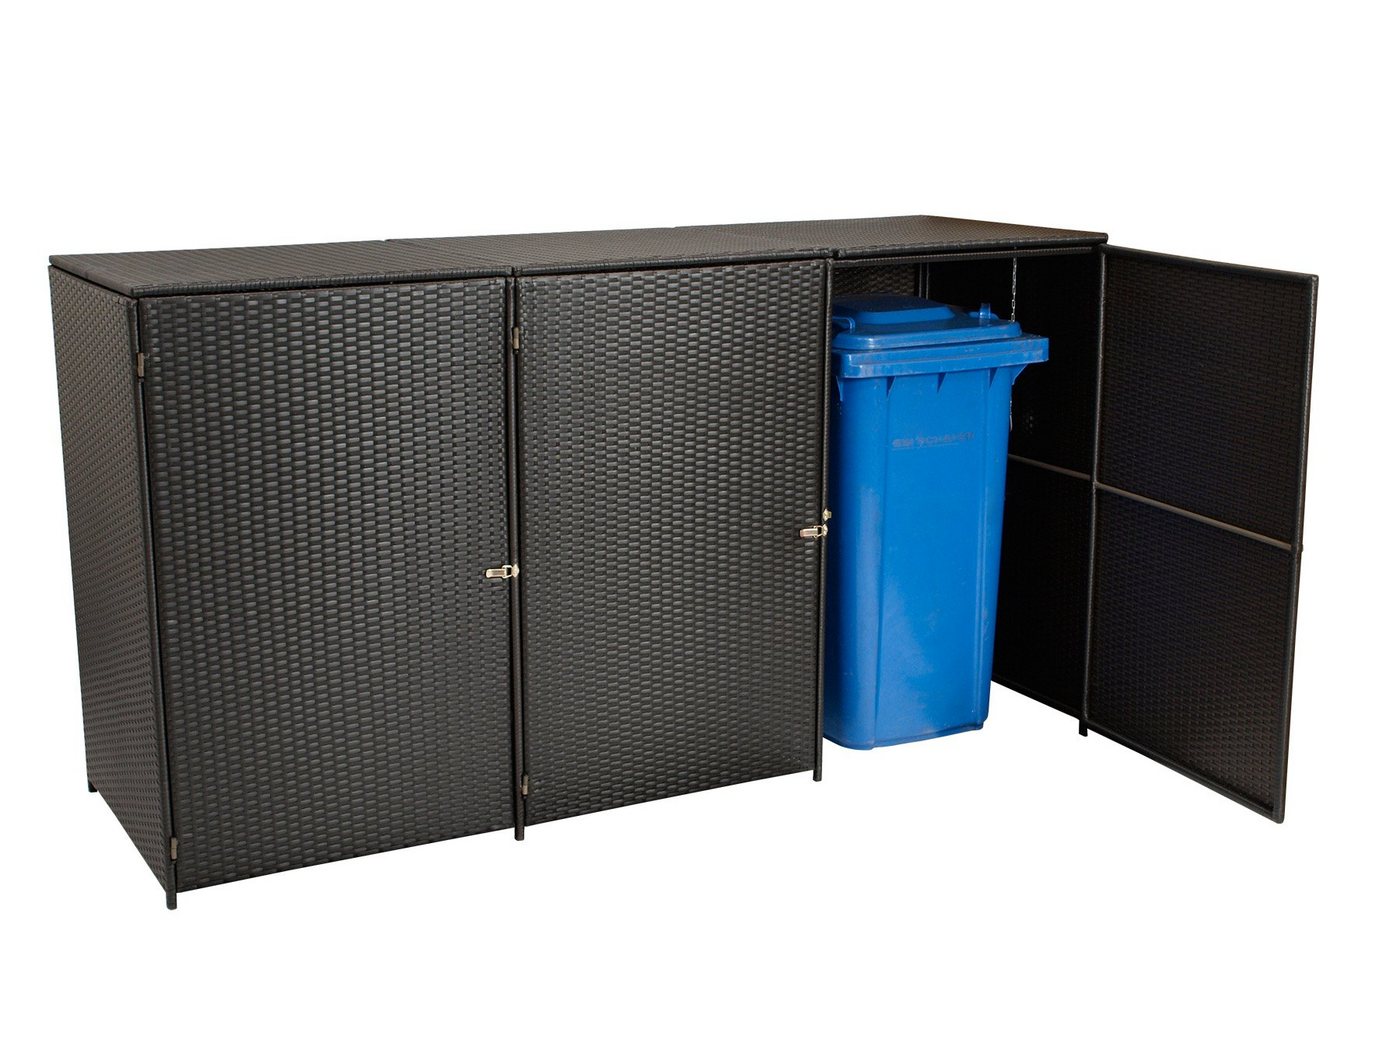 MERXX Mülltonnenbox (1 St), Dekorative Dreier - Mülltonnenbox, Stahlgestell + wetterfestes Polyrattan moccafarben, Maße: 78x220x123cm von MERXX